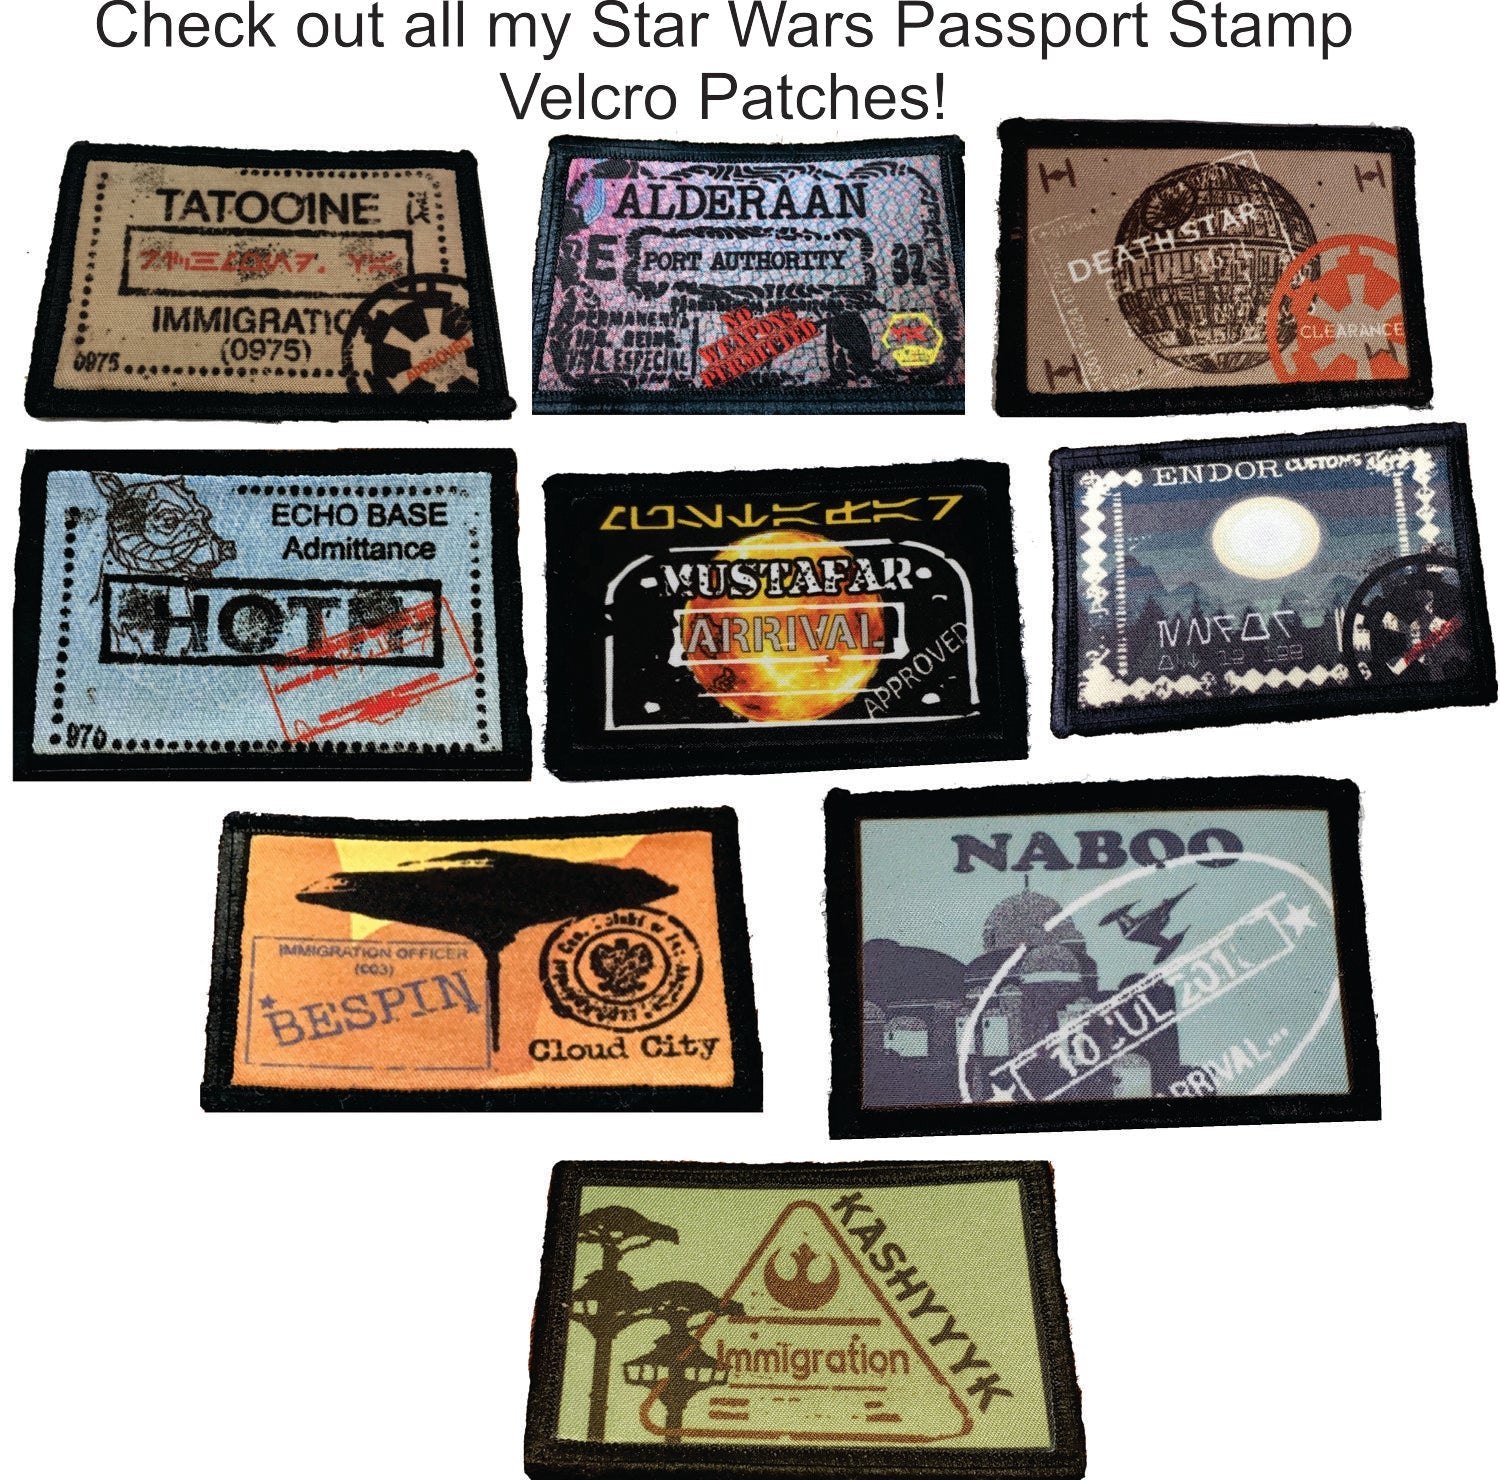 Star Wars passport stamp morale patch